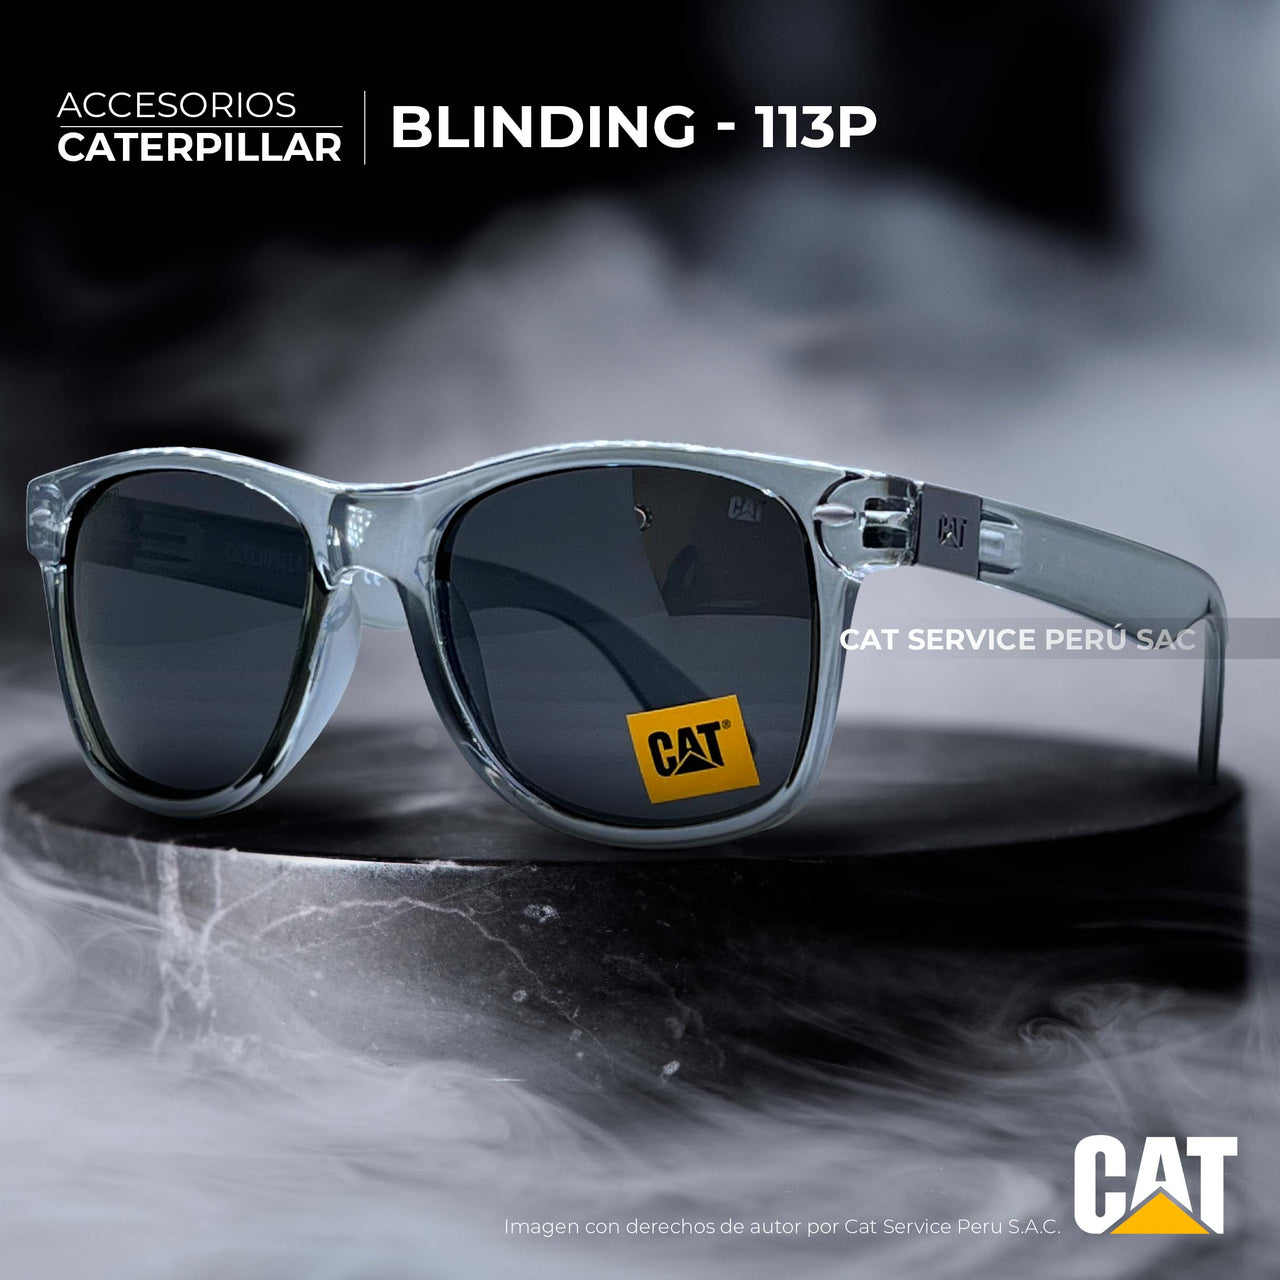 Cat CTS Blinding 113 Moons Gray Polarized Sunglasses 